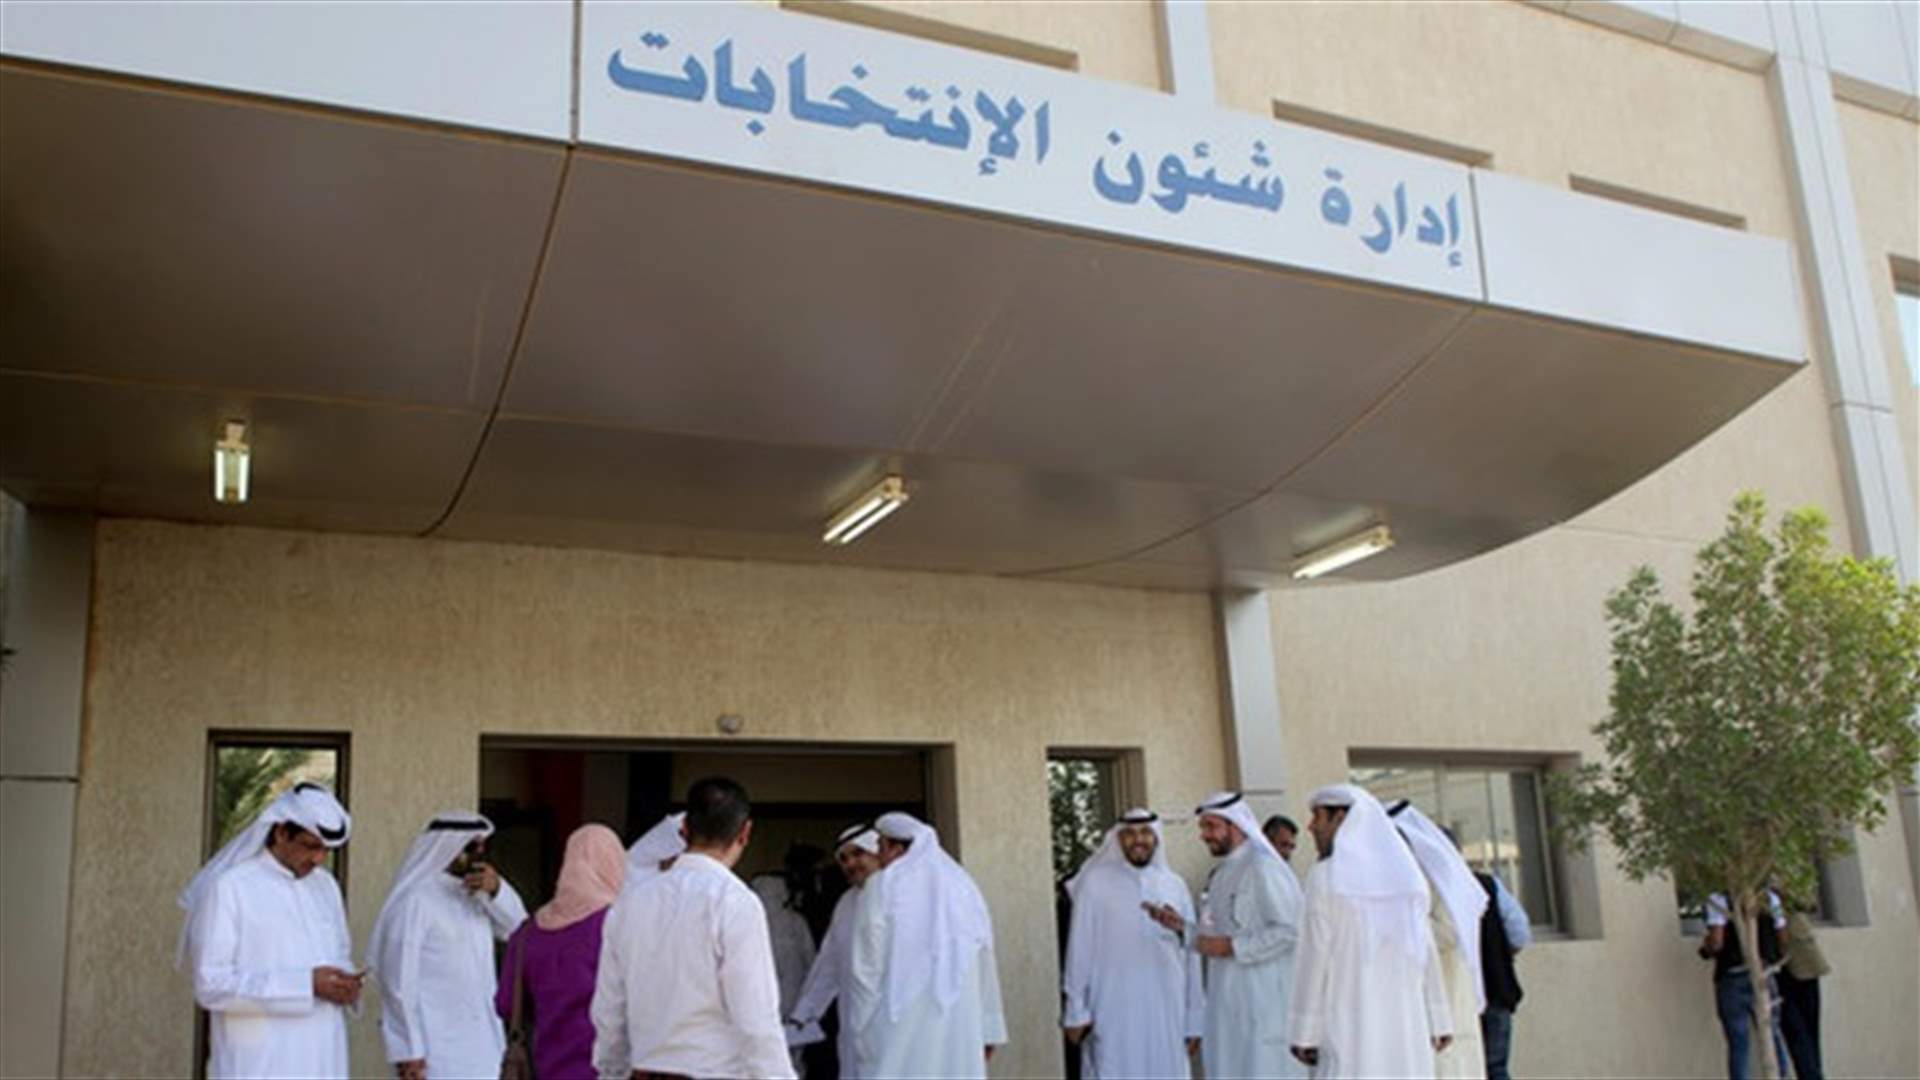 Polls open in Kuwait elections